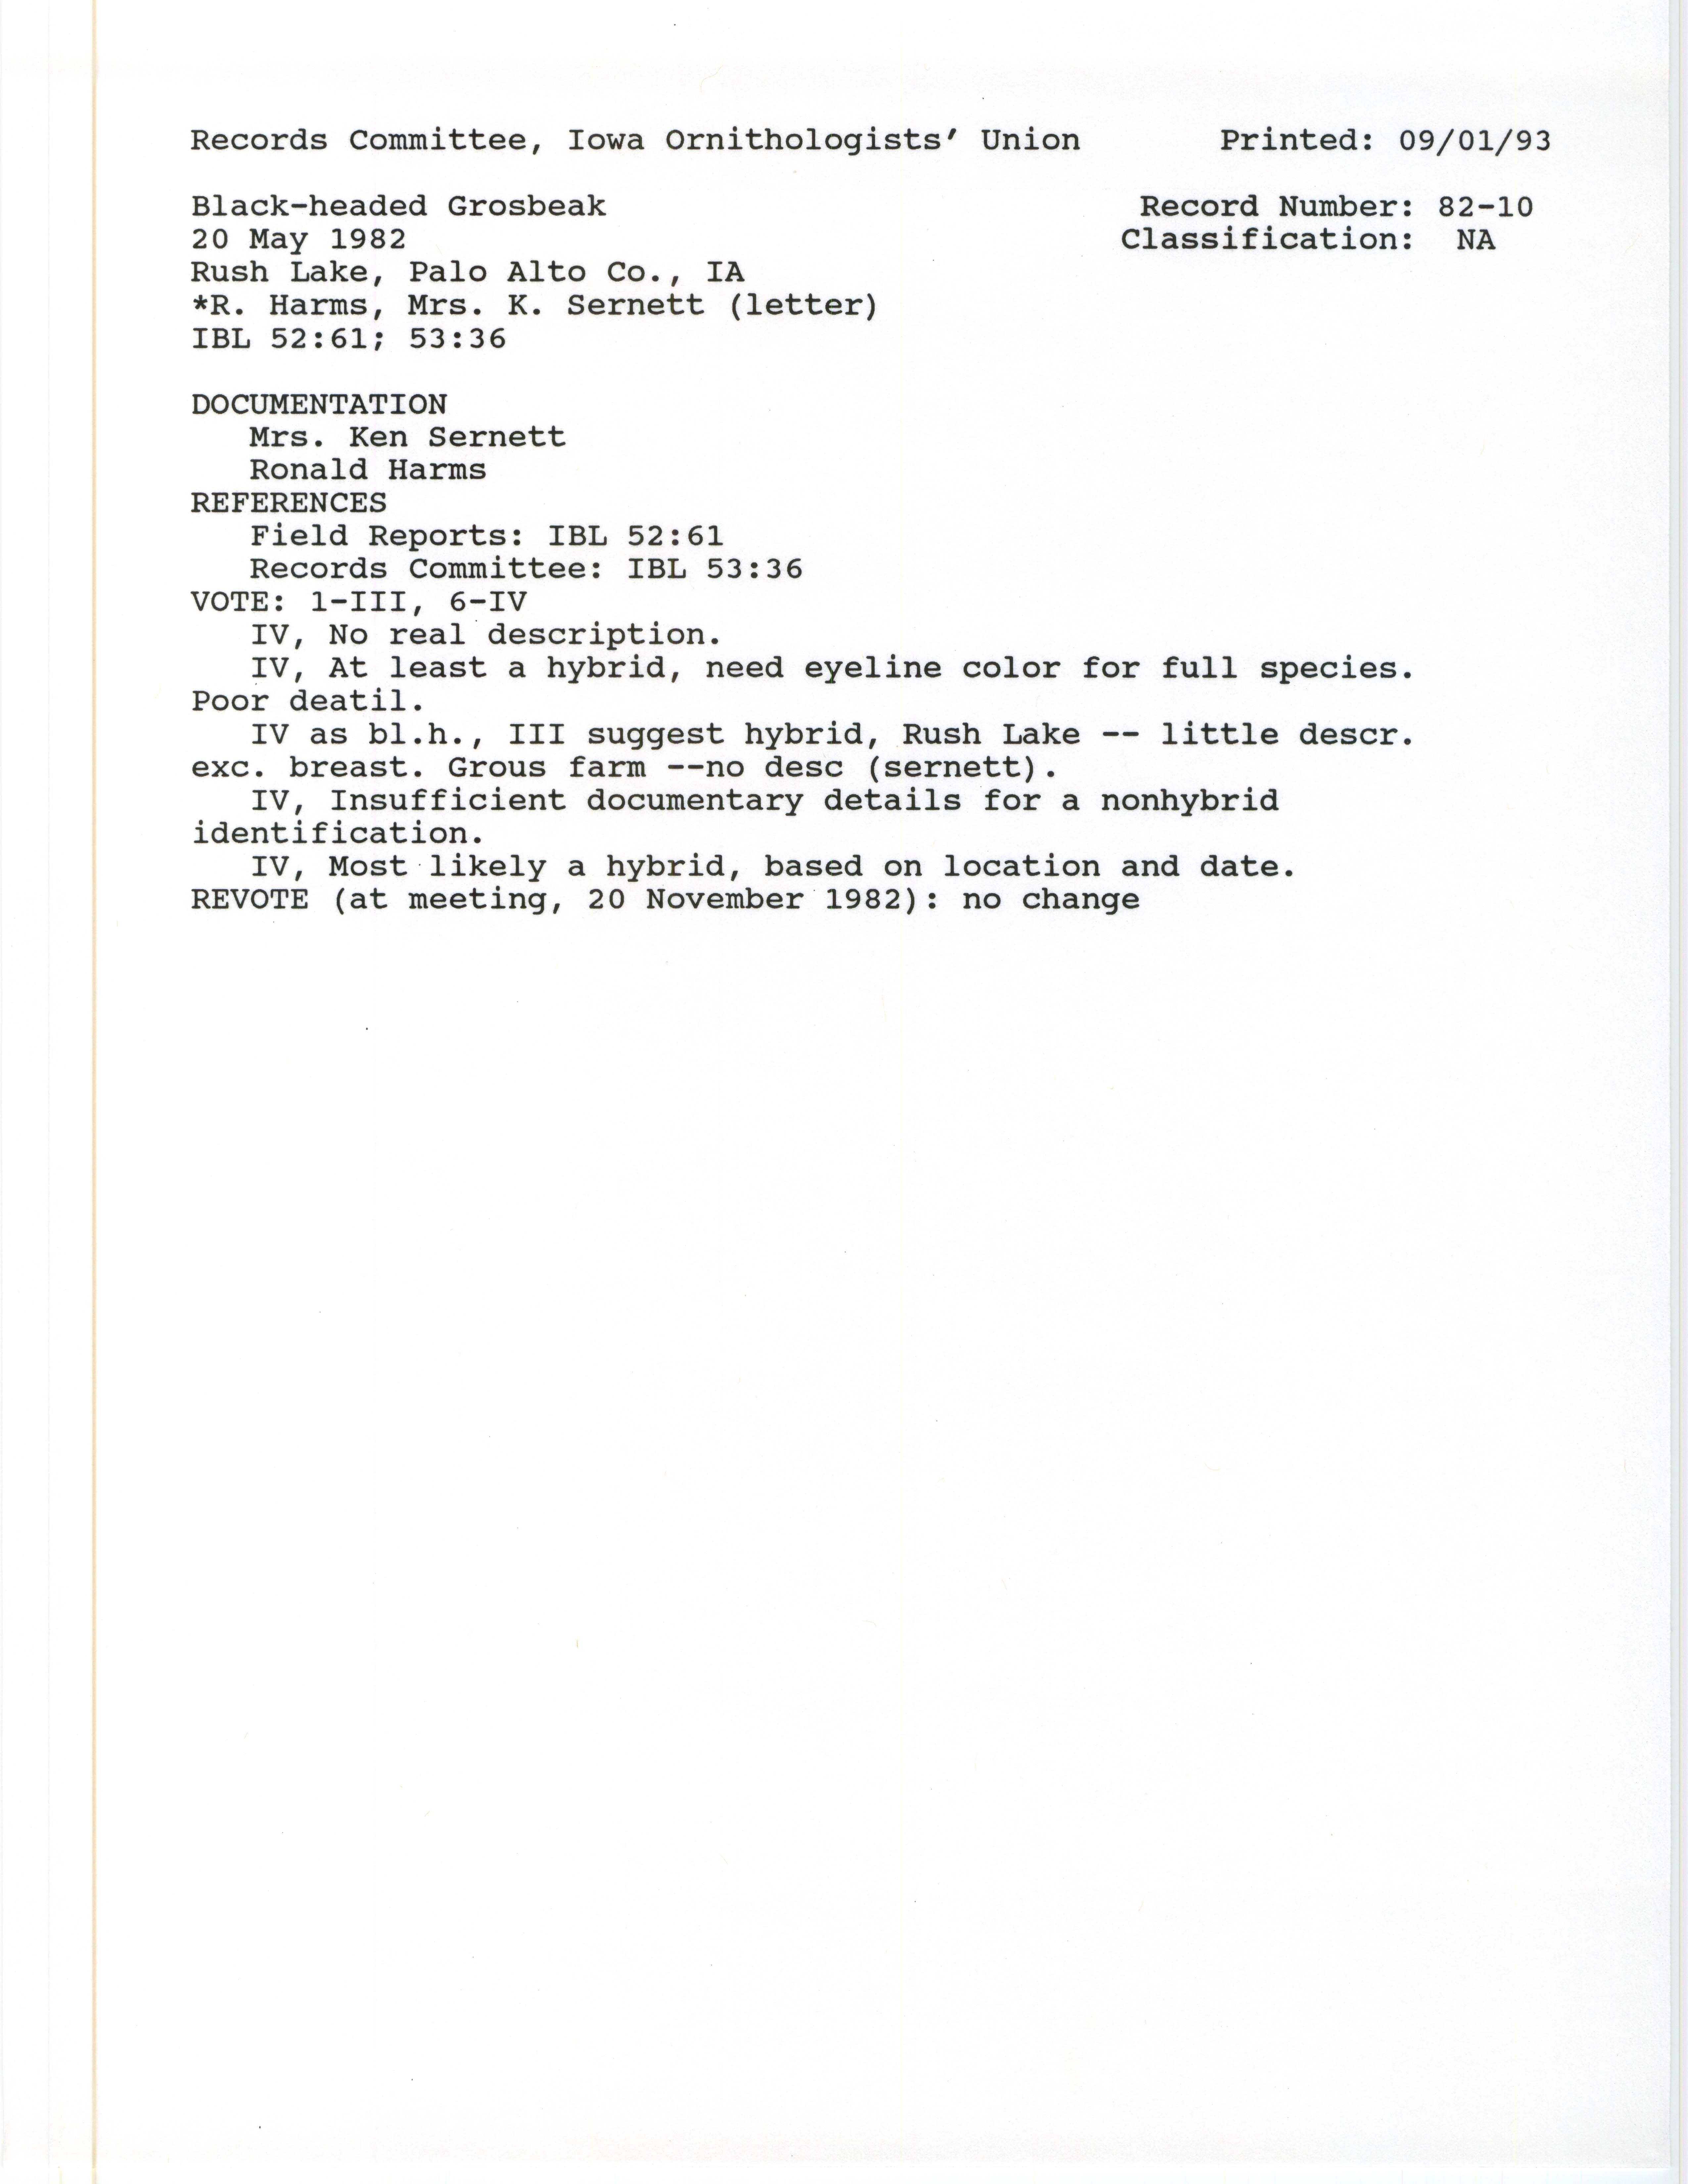 Records Committee review for rare bird sighting for Black-headed Grosbeak at Rush Lake, 1982